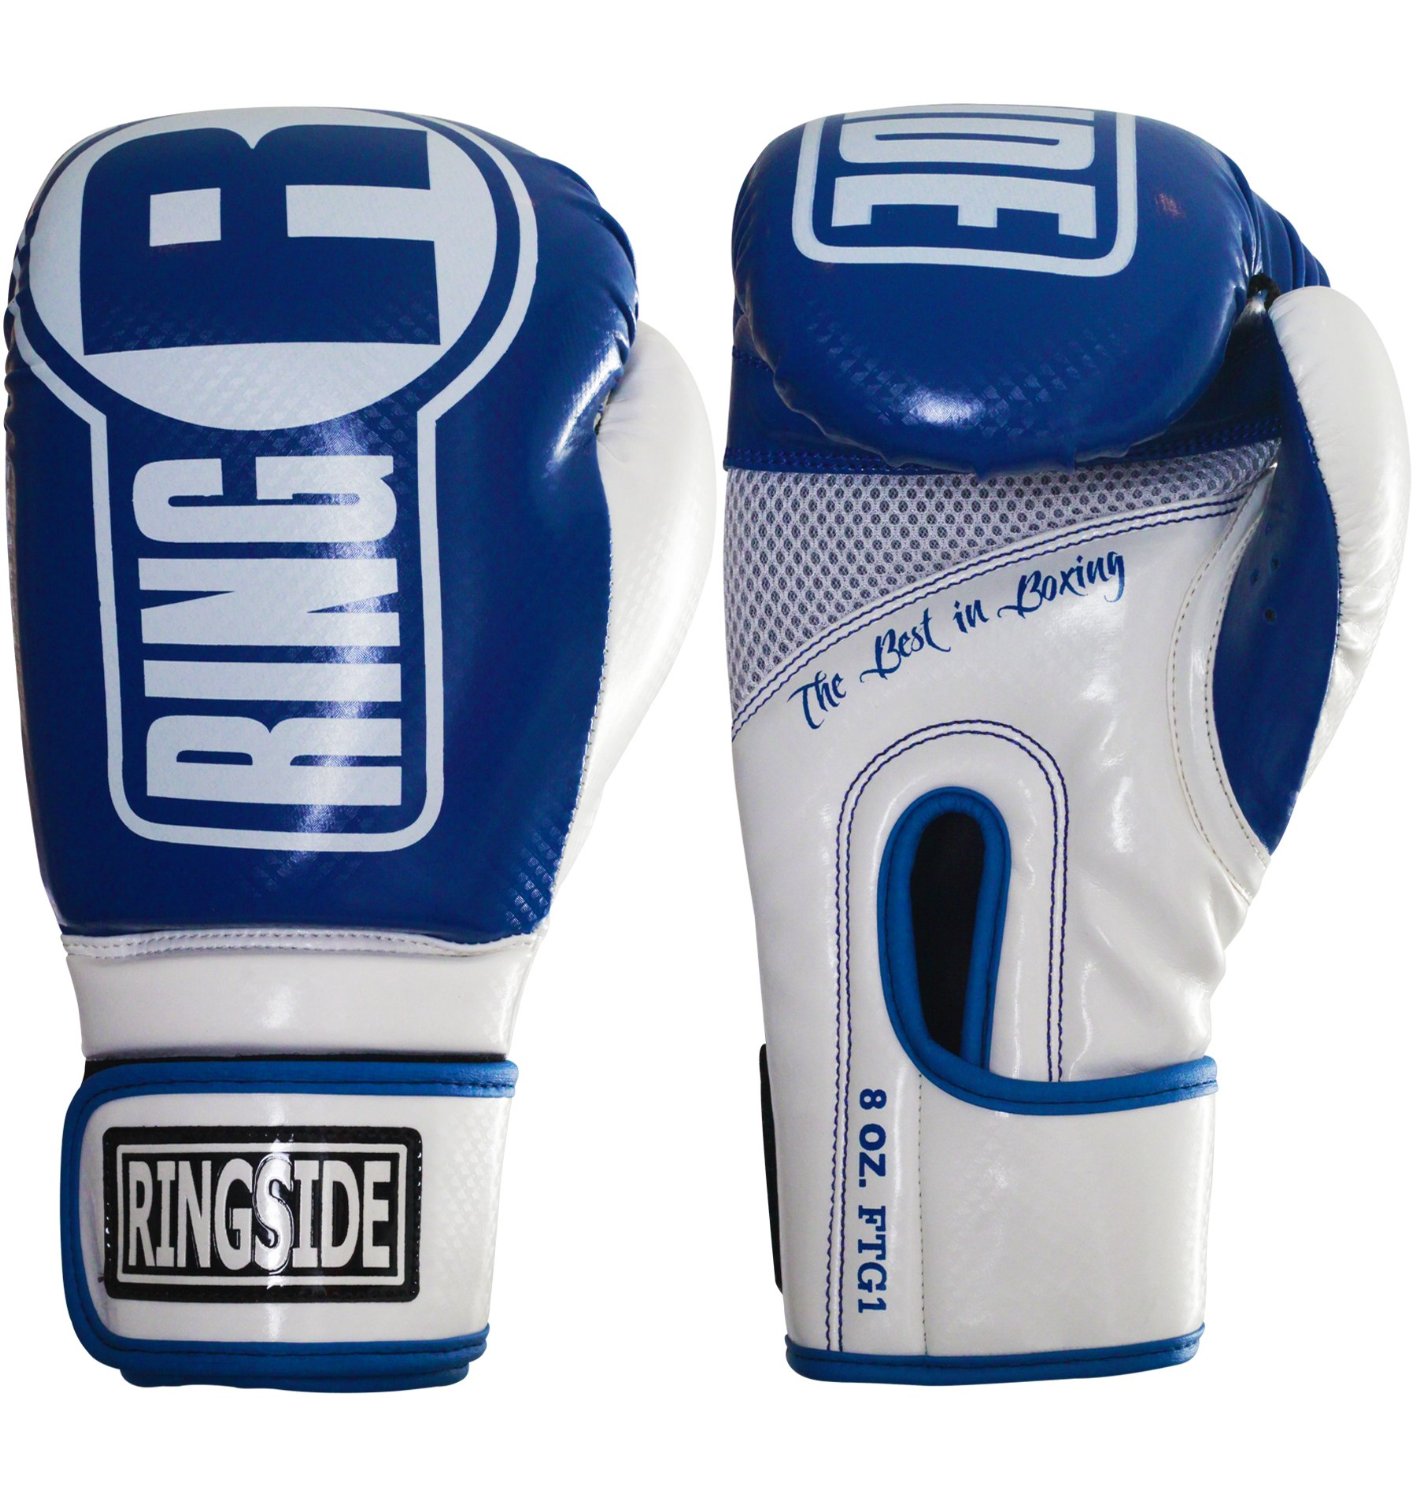 Ringside boxing gloves - blue and white